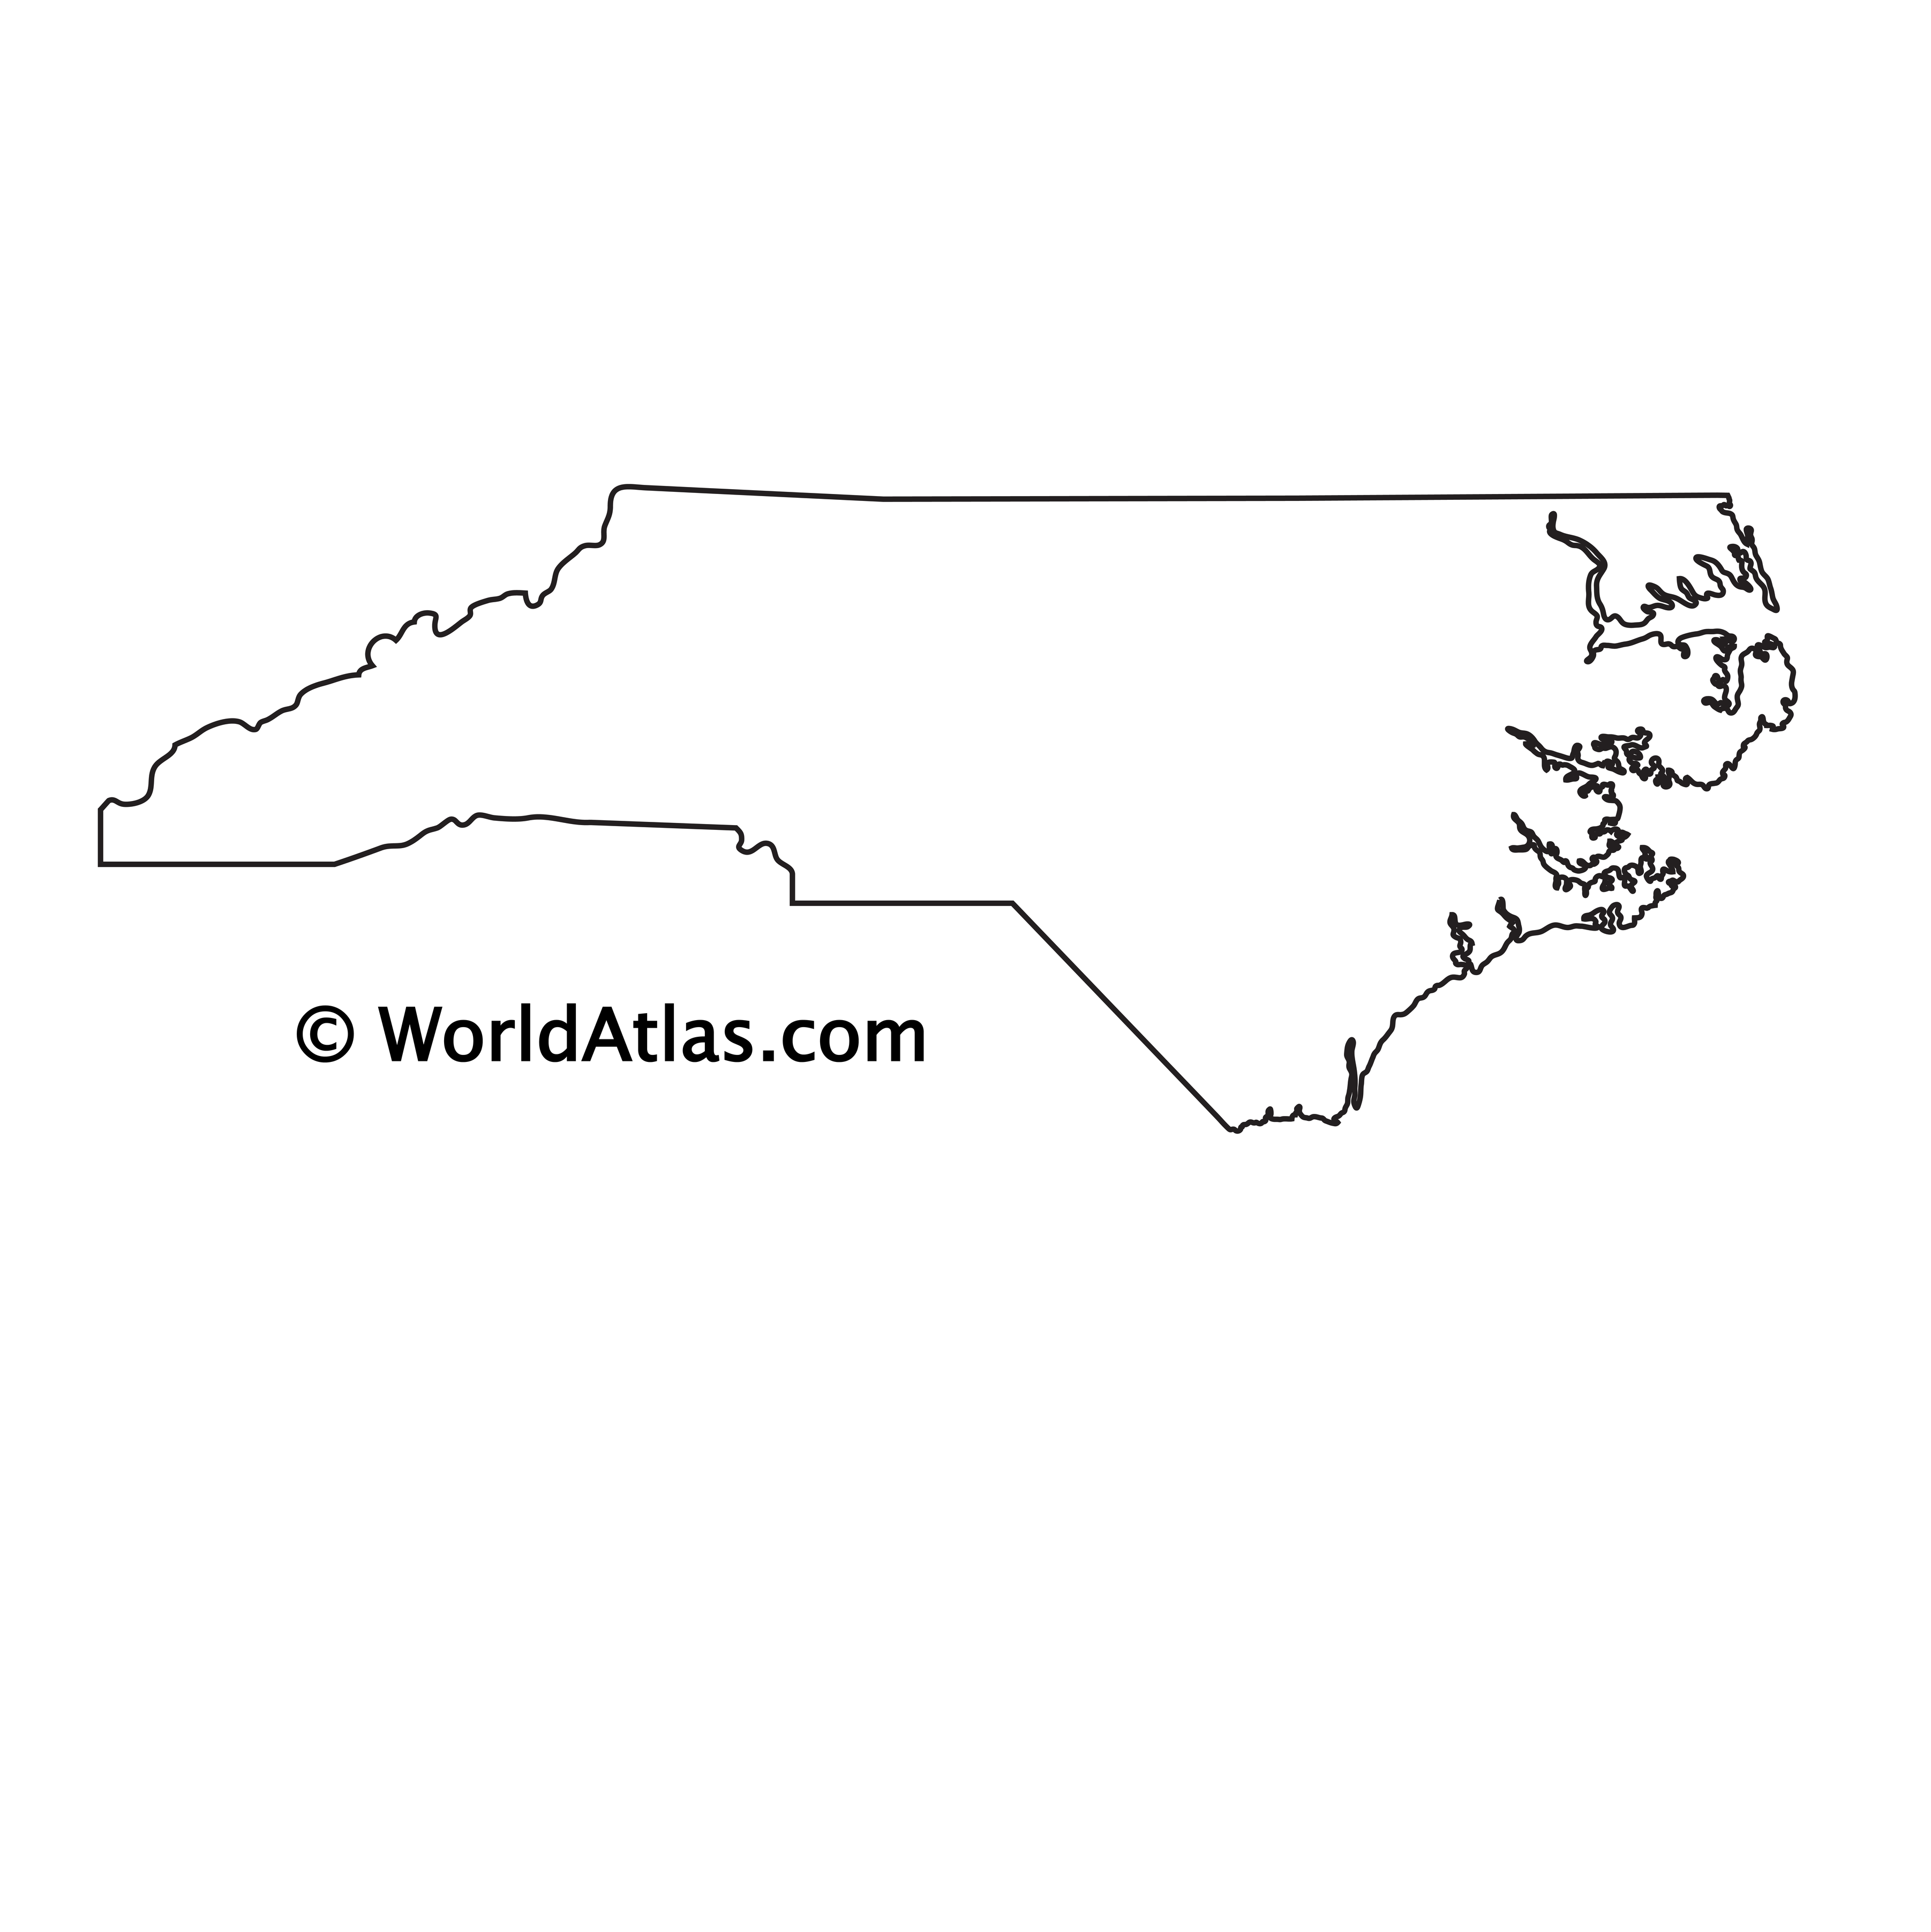 Charlotte, North Carolina - WorldAtlas